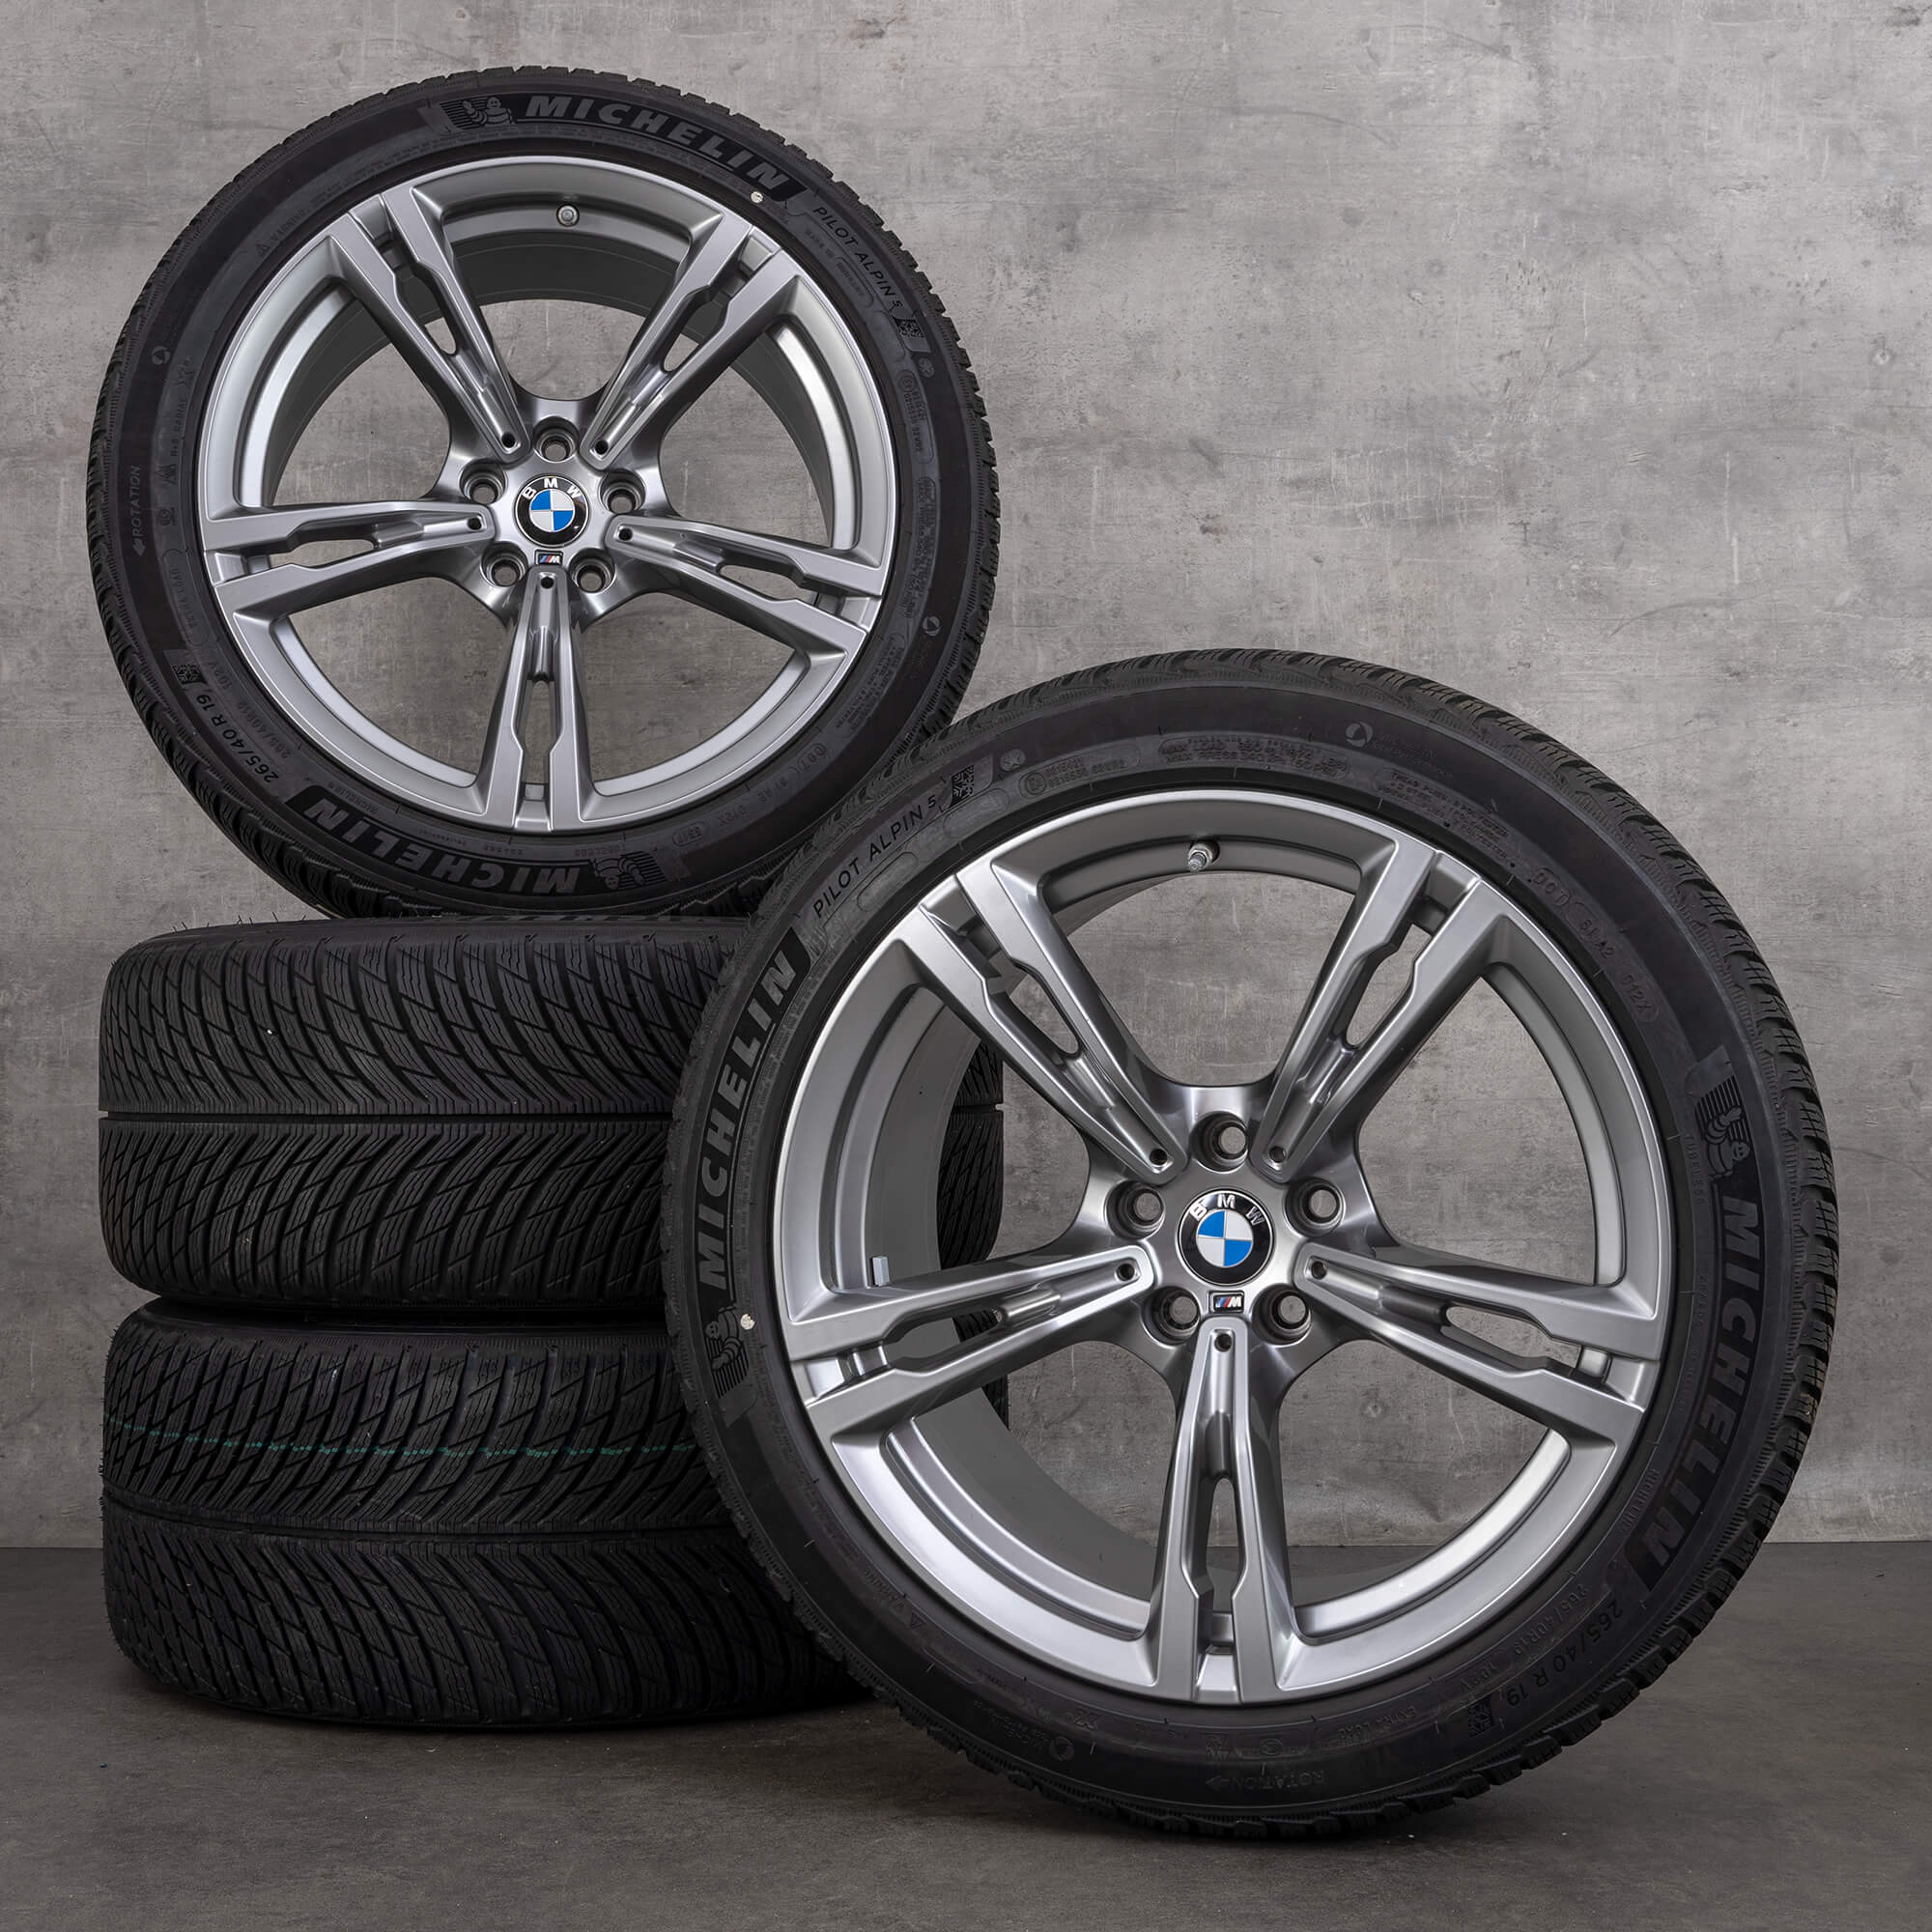 BMW 19 inch rims M5 F90 winter wheels tires alloy styling M705 5 mm